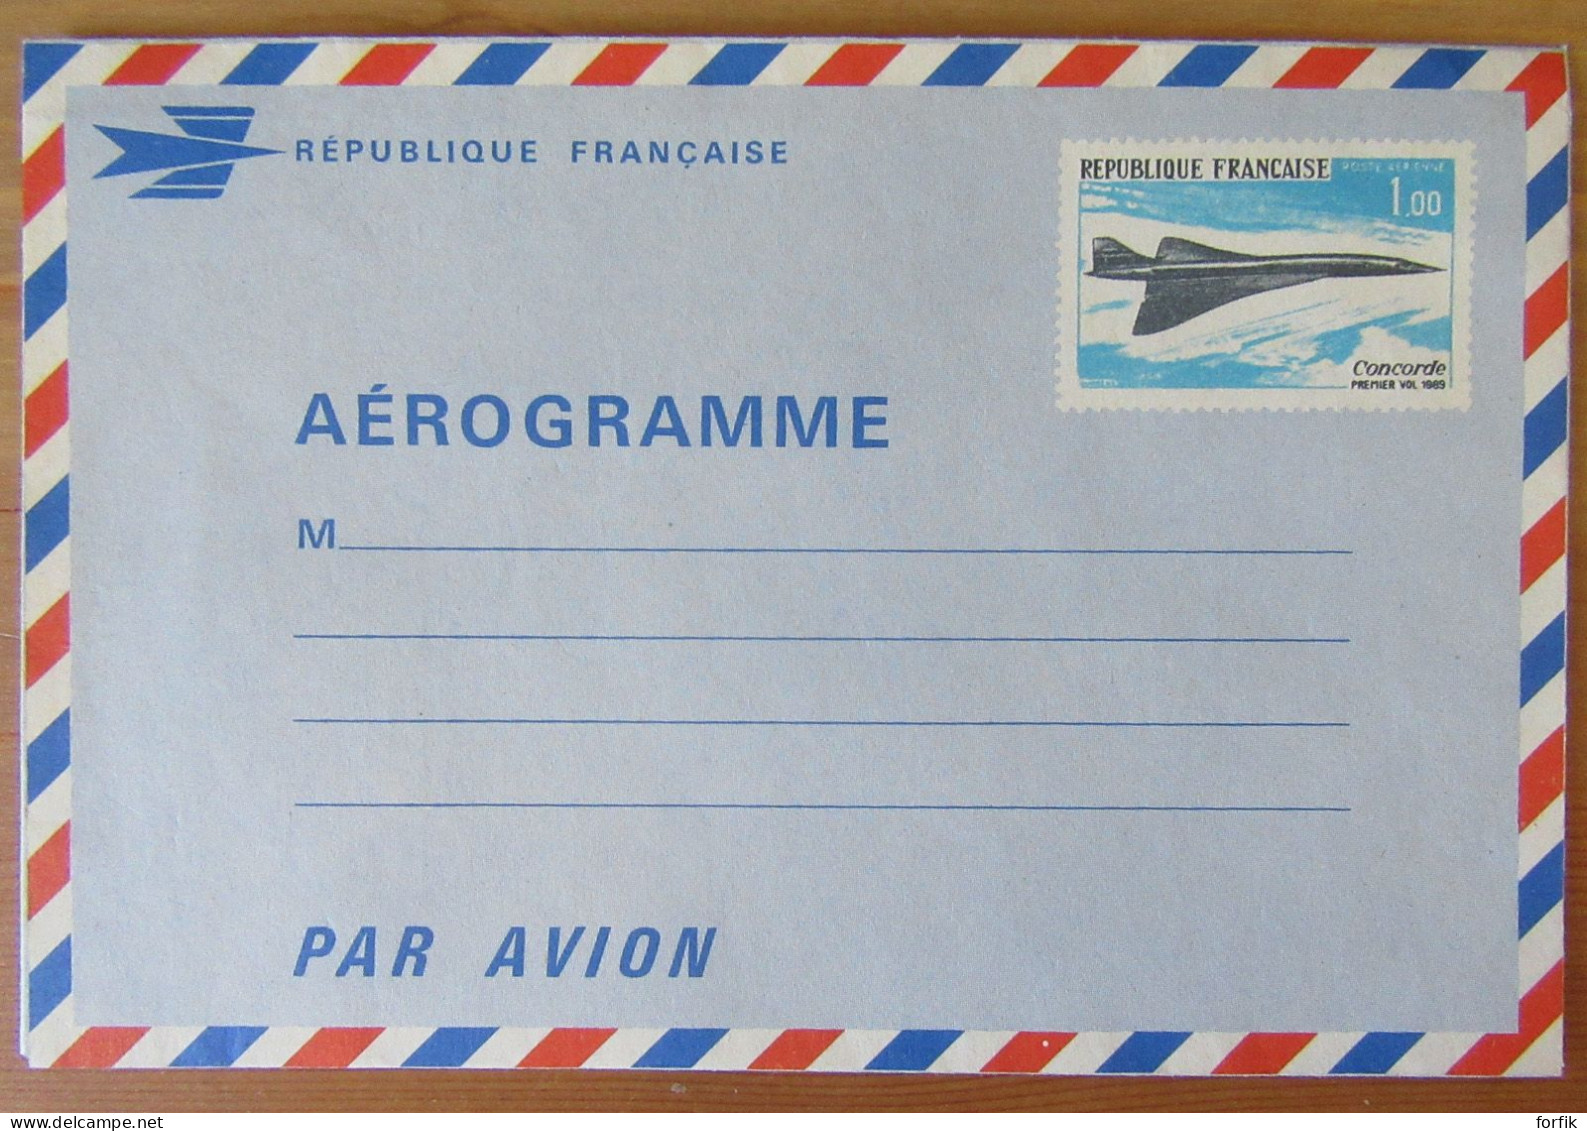 France - Aérogramme Concorde 1001-AER Neuf - Aerogramme